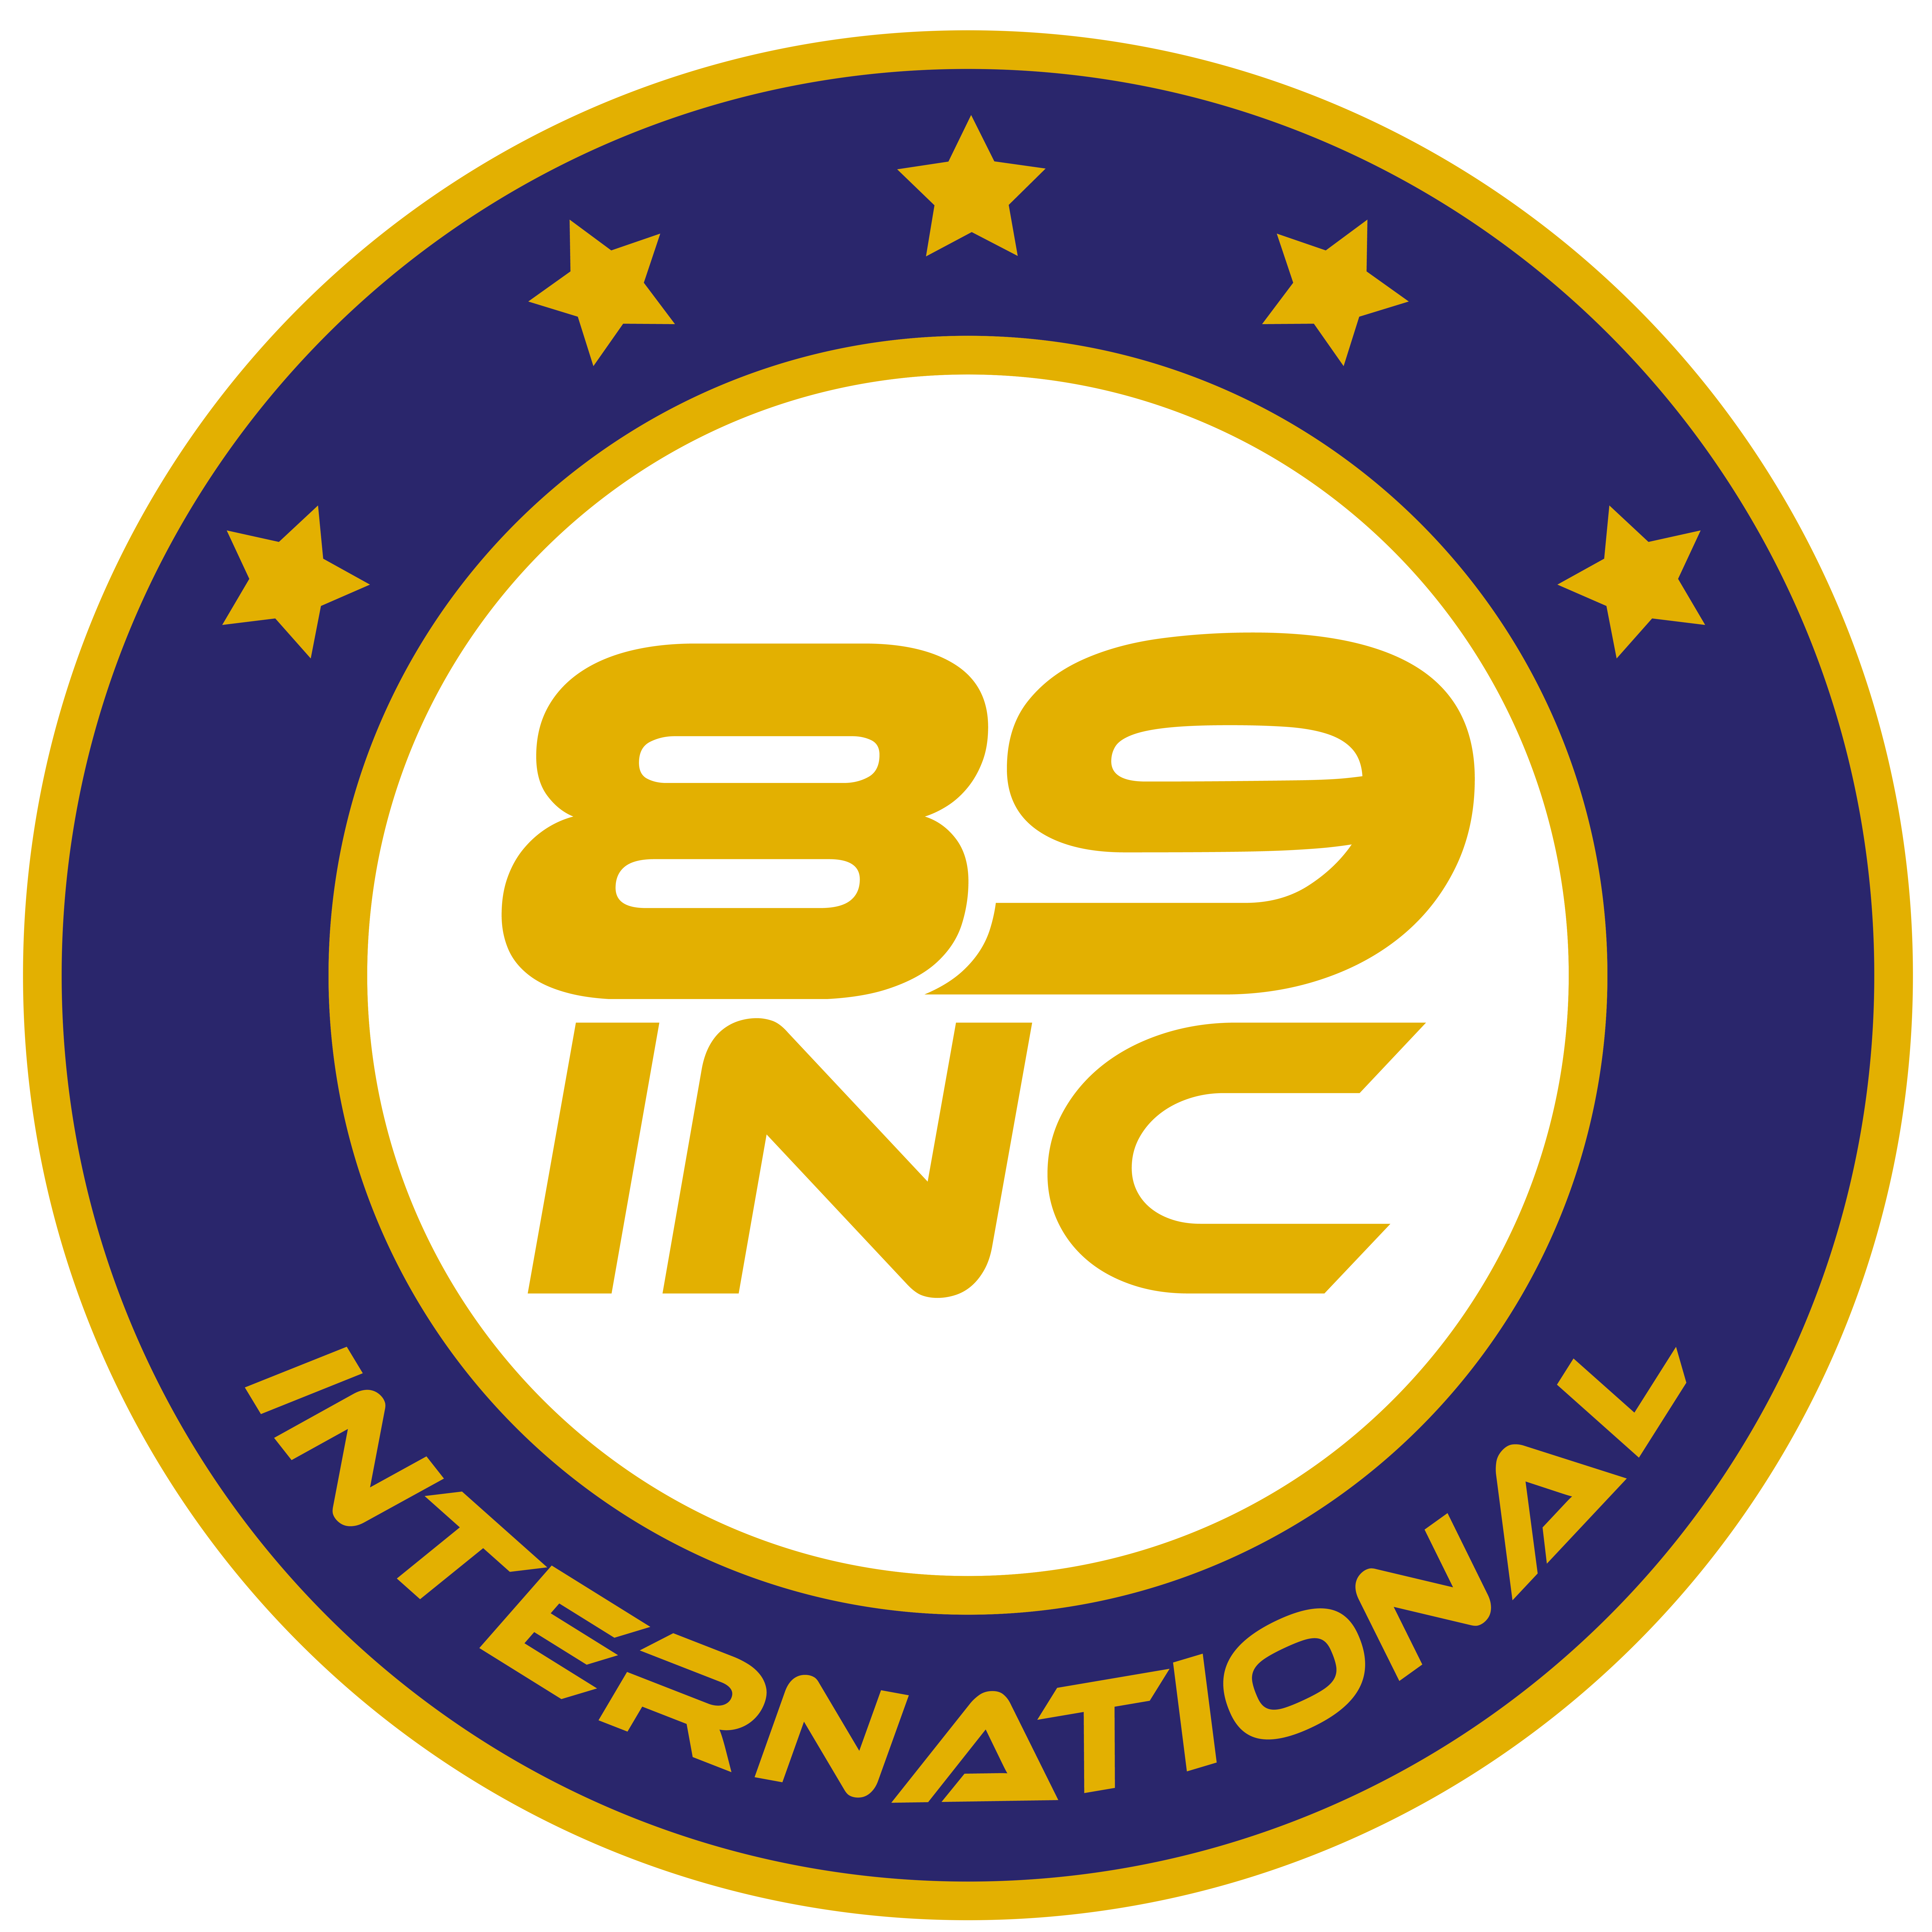 89 INTERNATIONAL